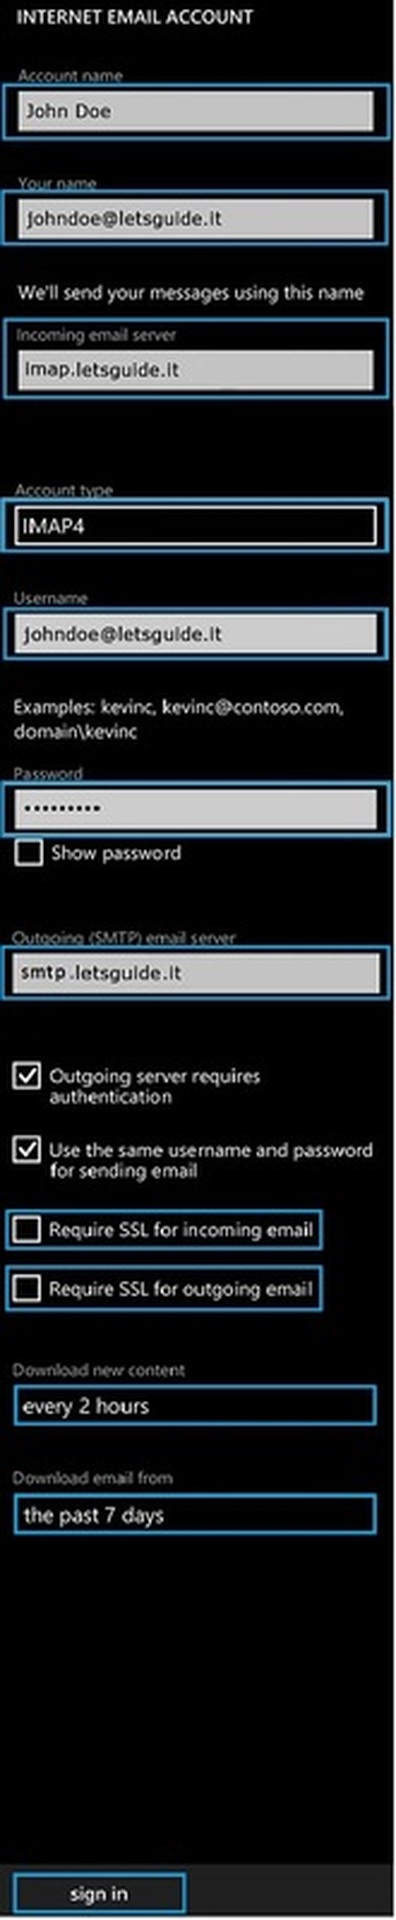 Windows Phone Email Configuration